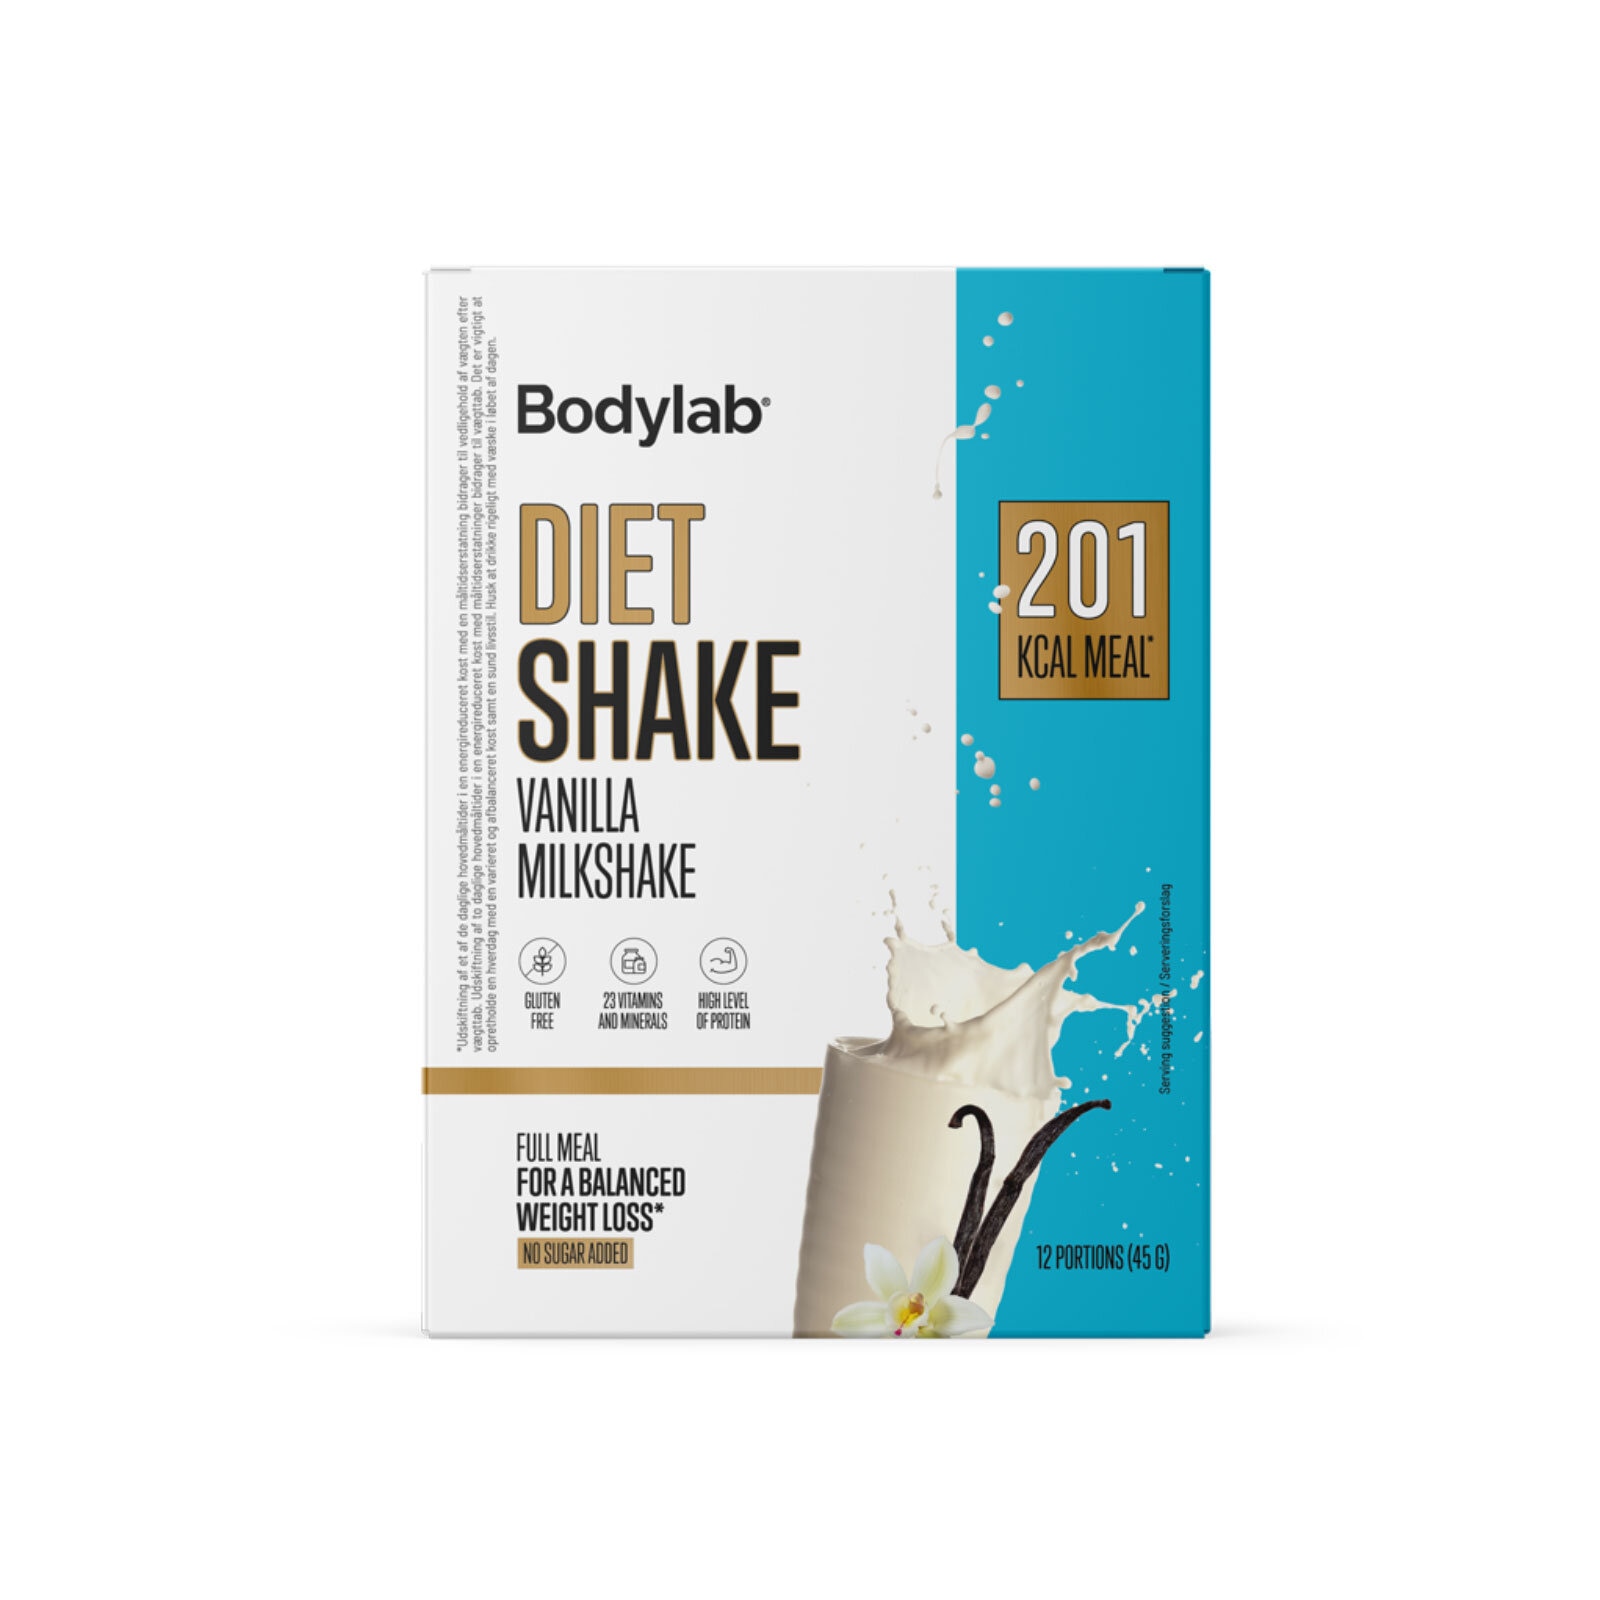 Bodylab diet shake vanilla